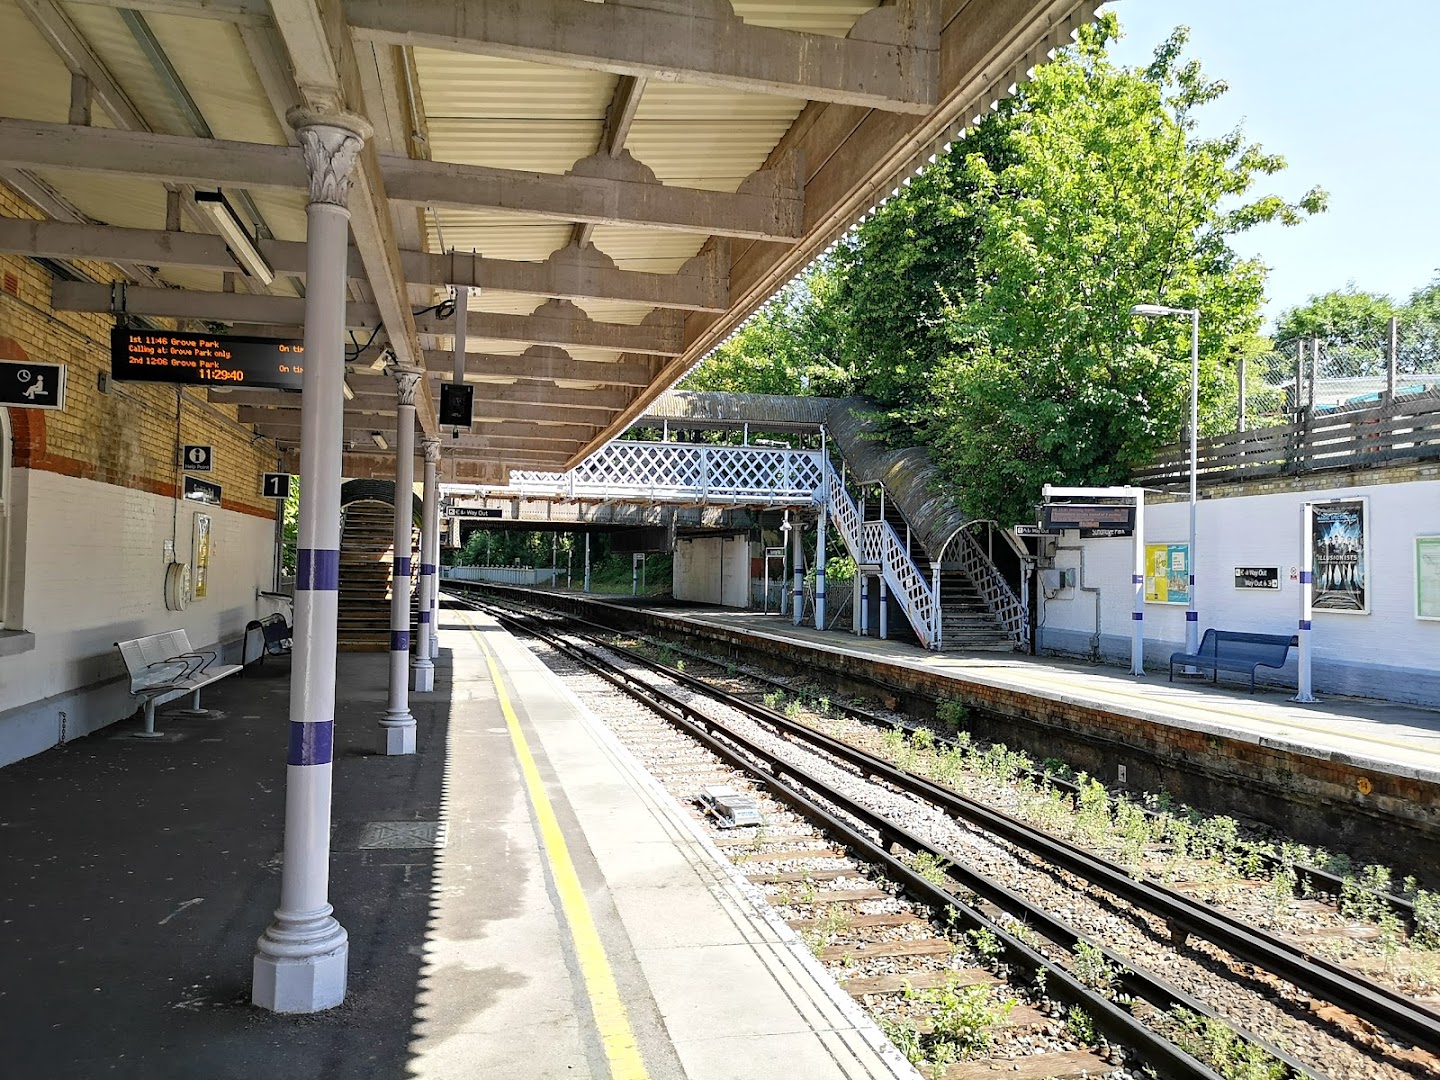 1 Bromley North Sundridge Park Railway Station Photo Grove Park SE&CR. 